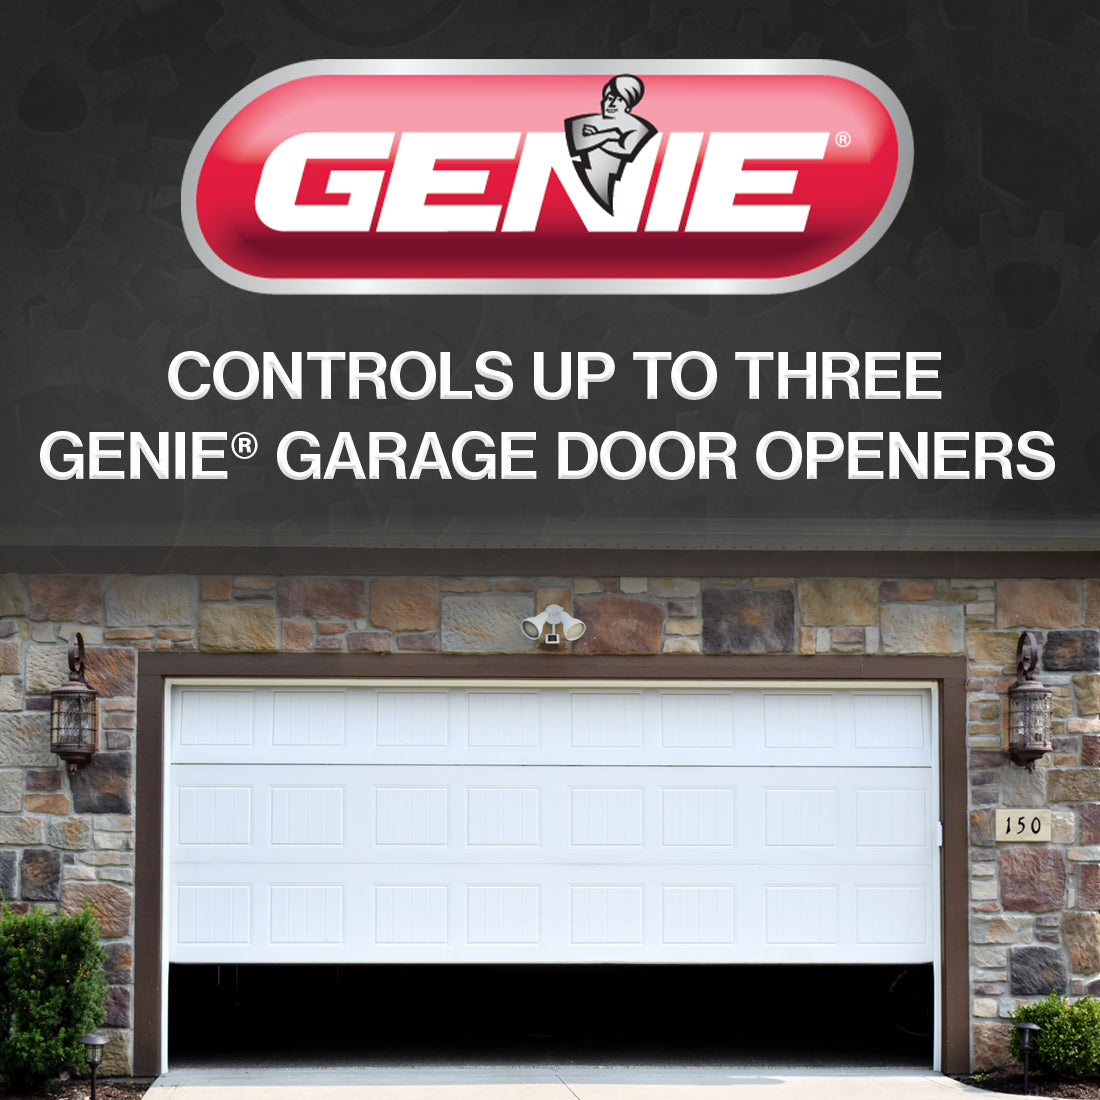 Genie Accessory controls up to three garage door openers